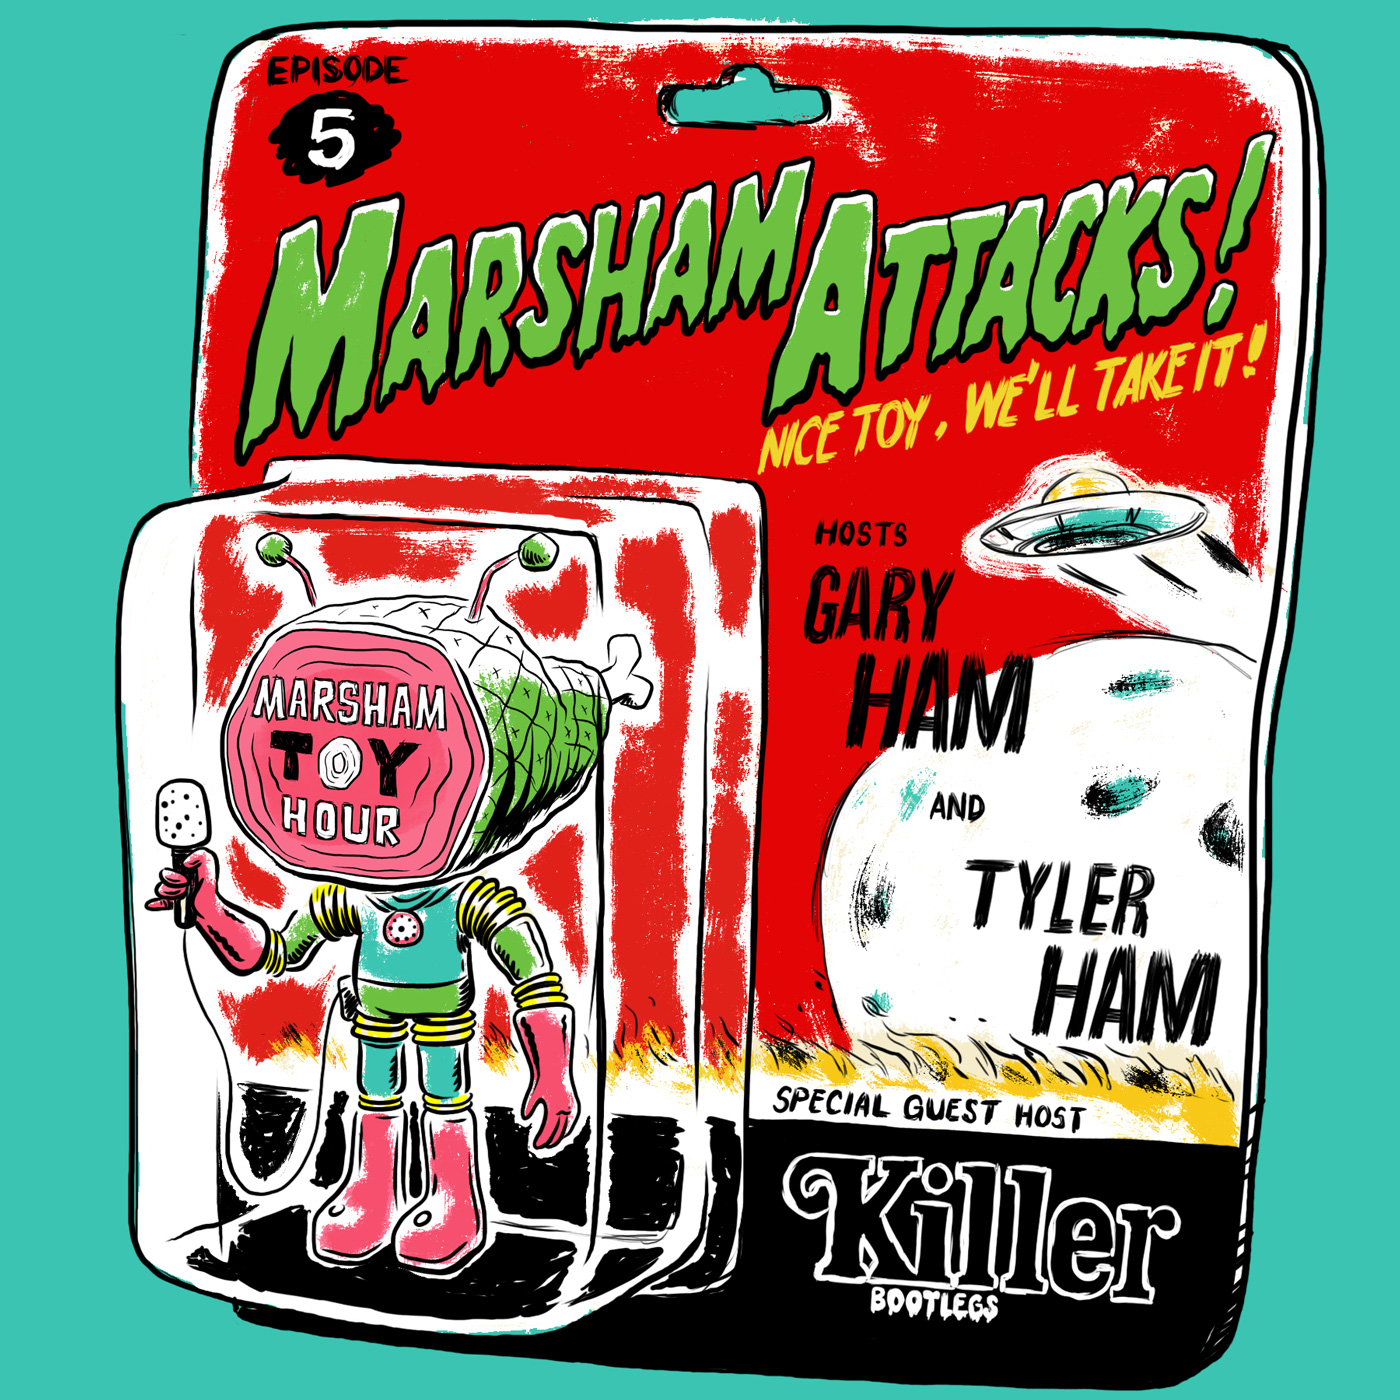 Marsham Toy Hour : Episode 5 - Bootlegs